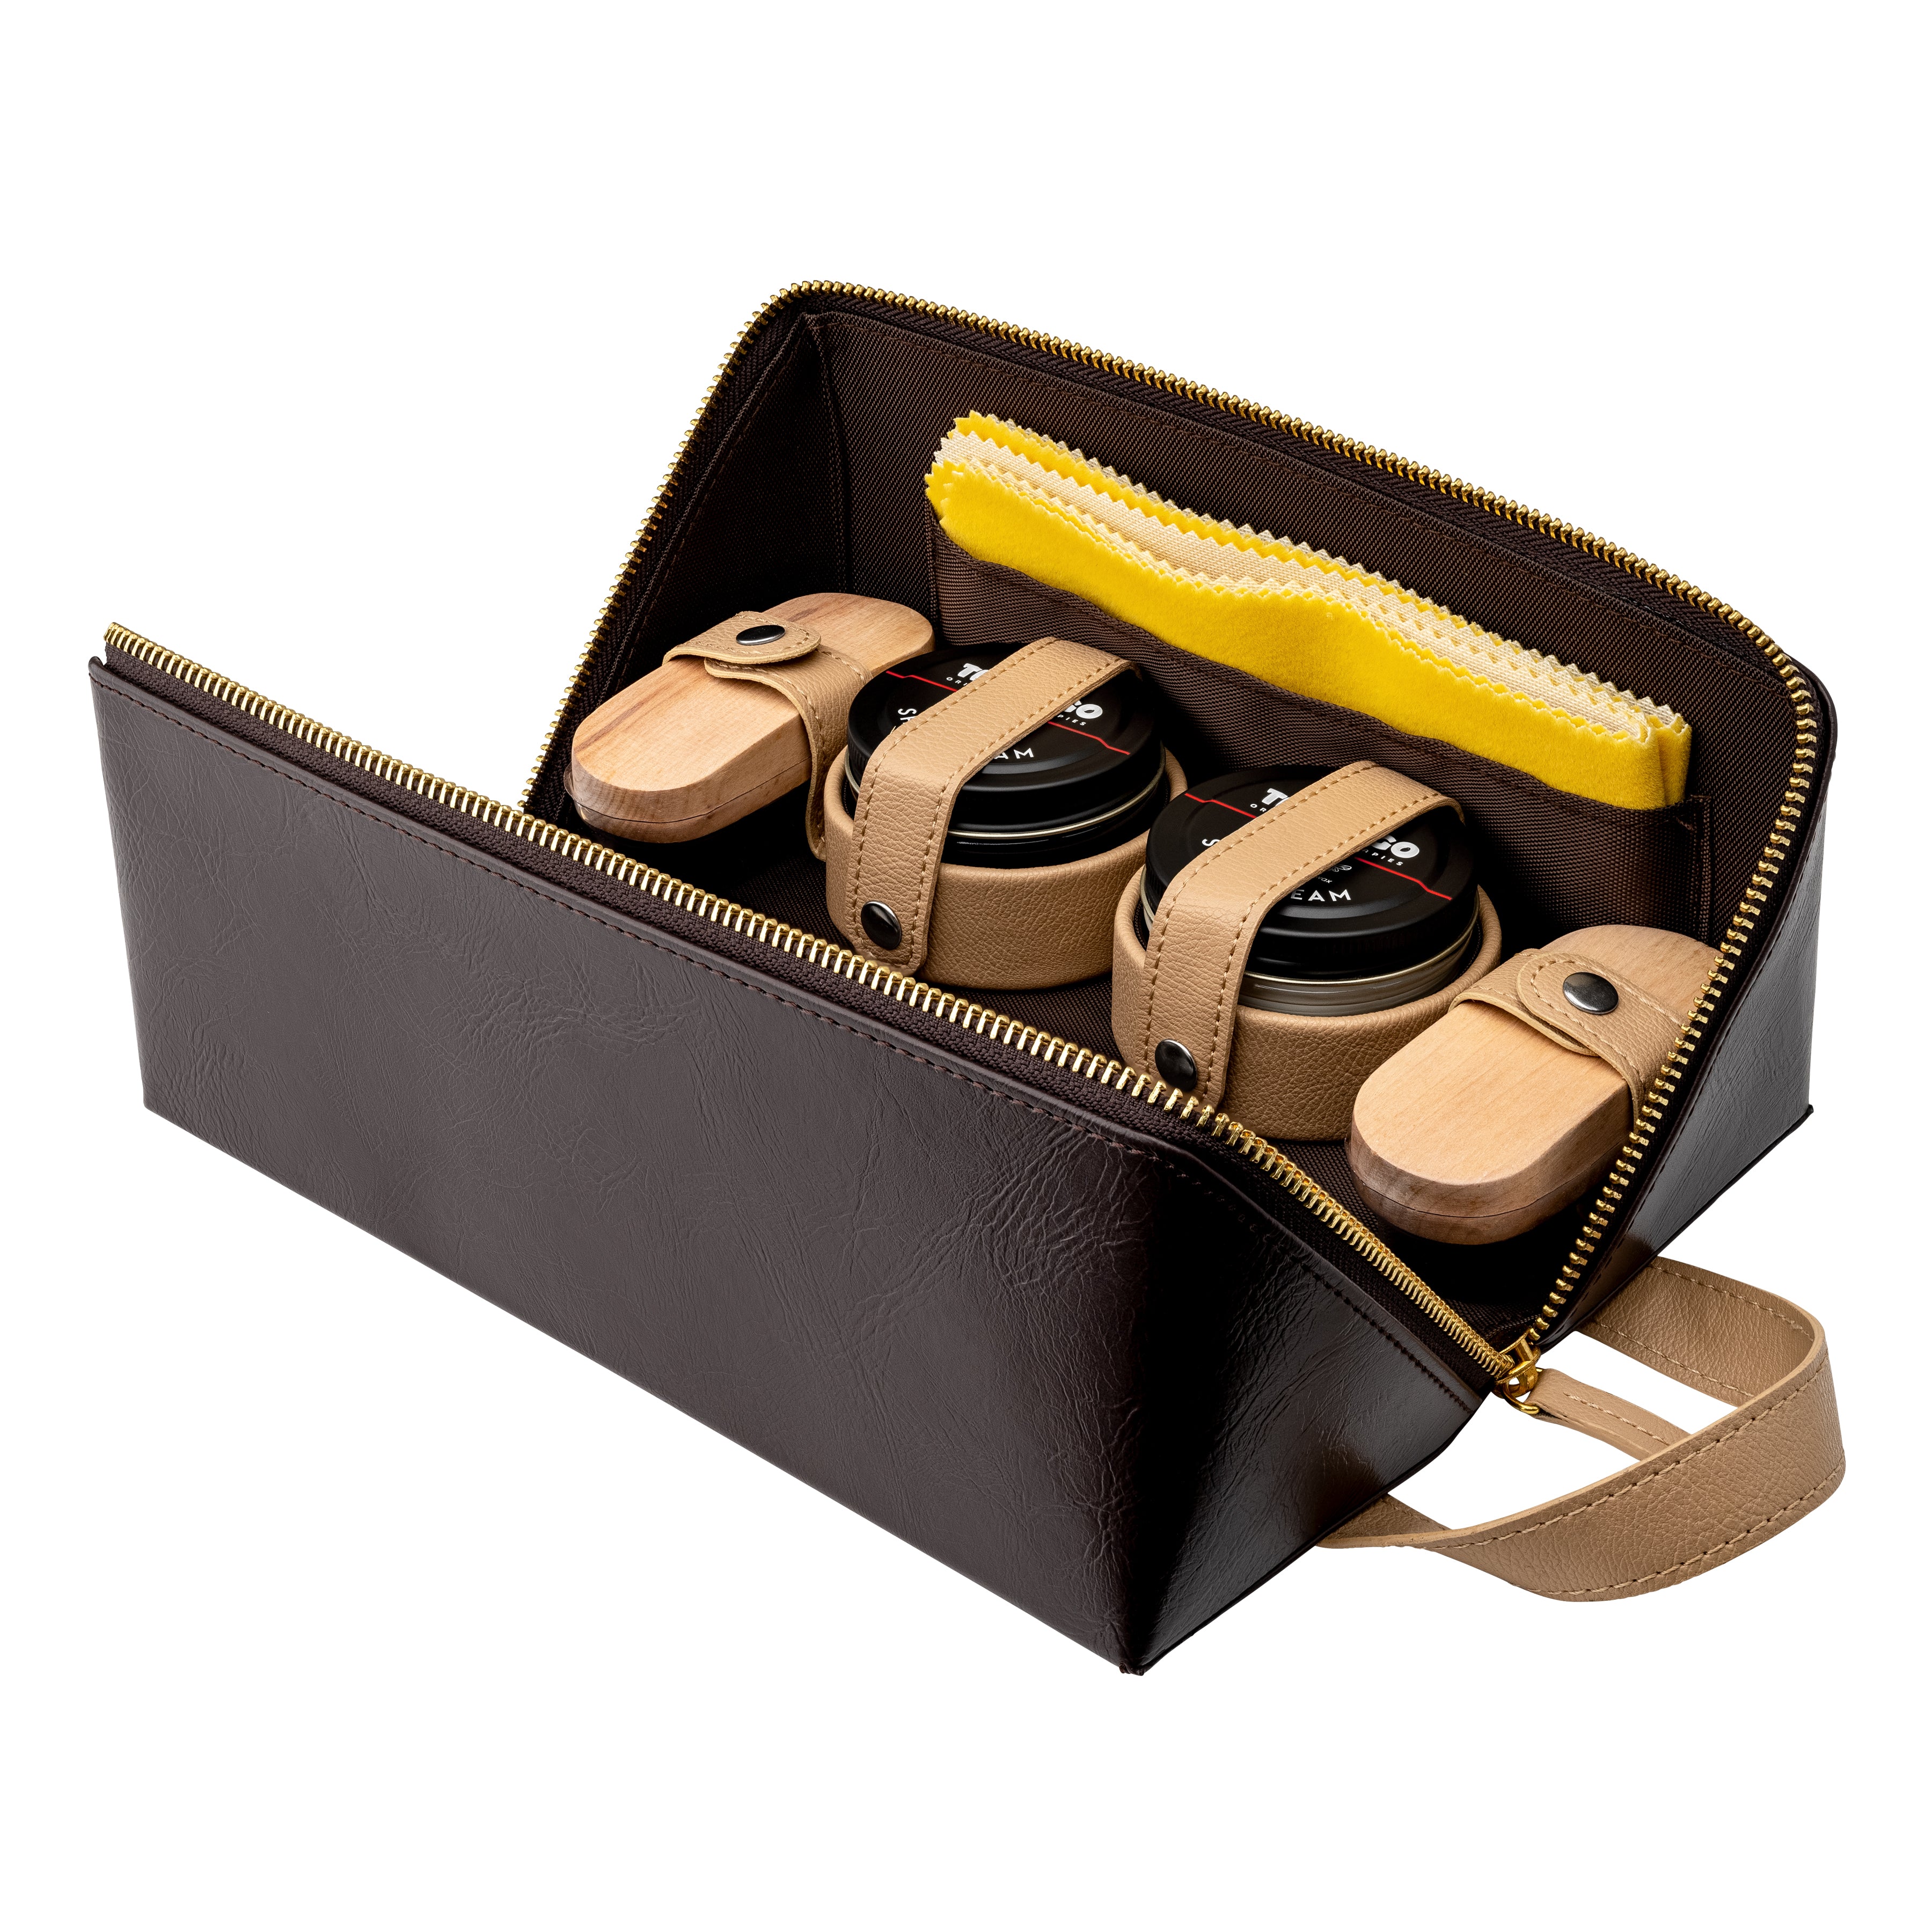 De Luxe Brown Shoe Care Travel Kit